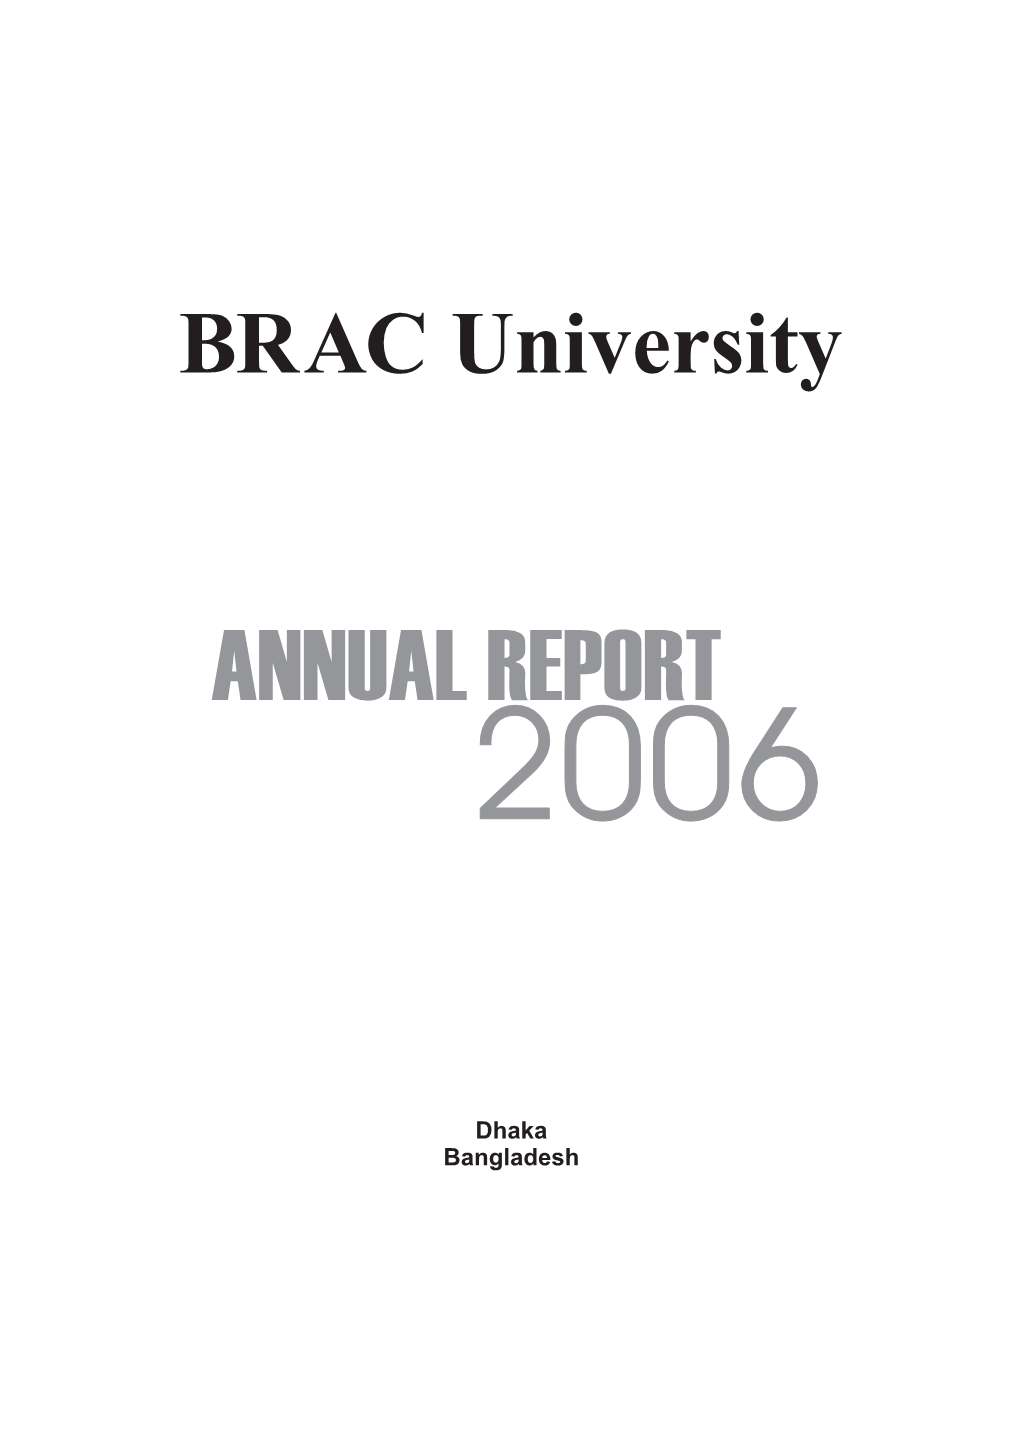 BRAC University Annual Report 2006 5